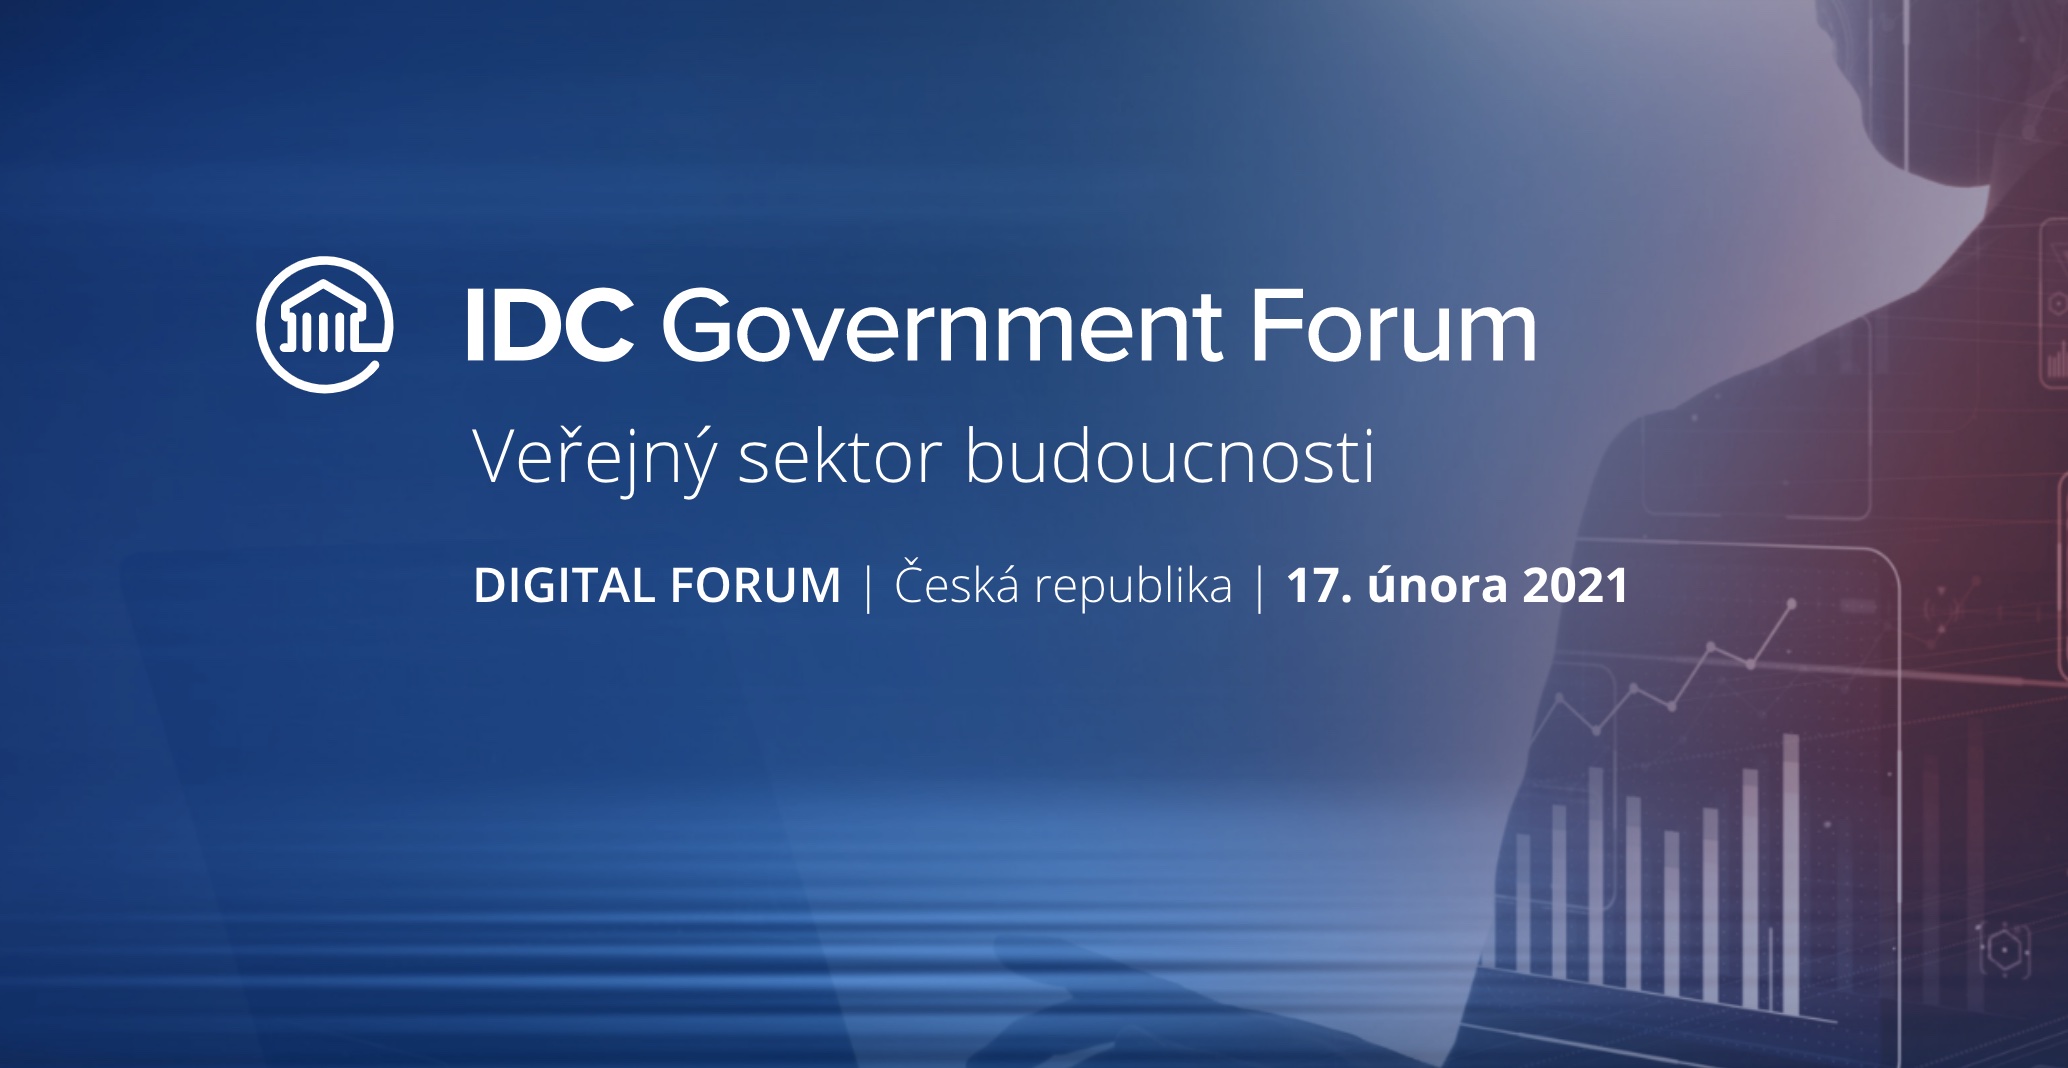 IDC Government Forum